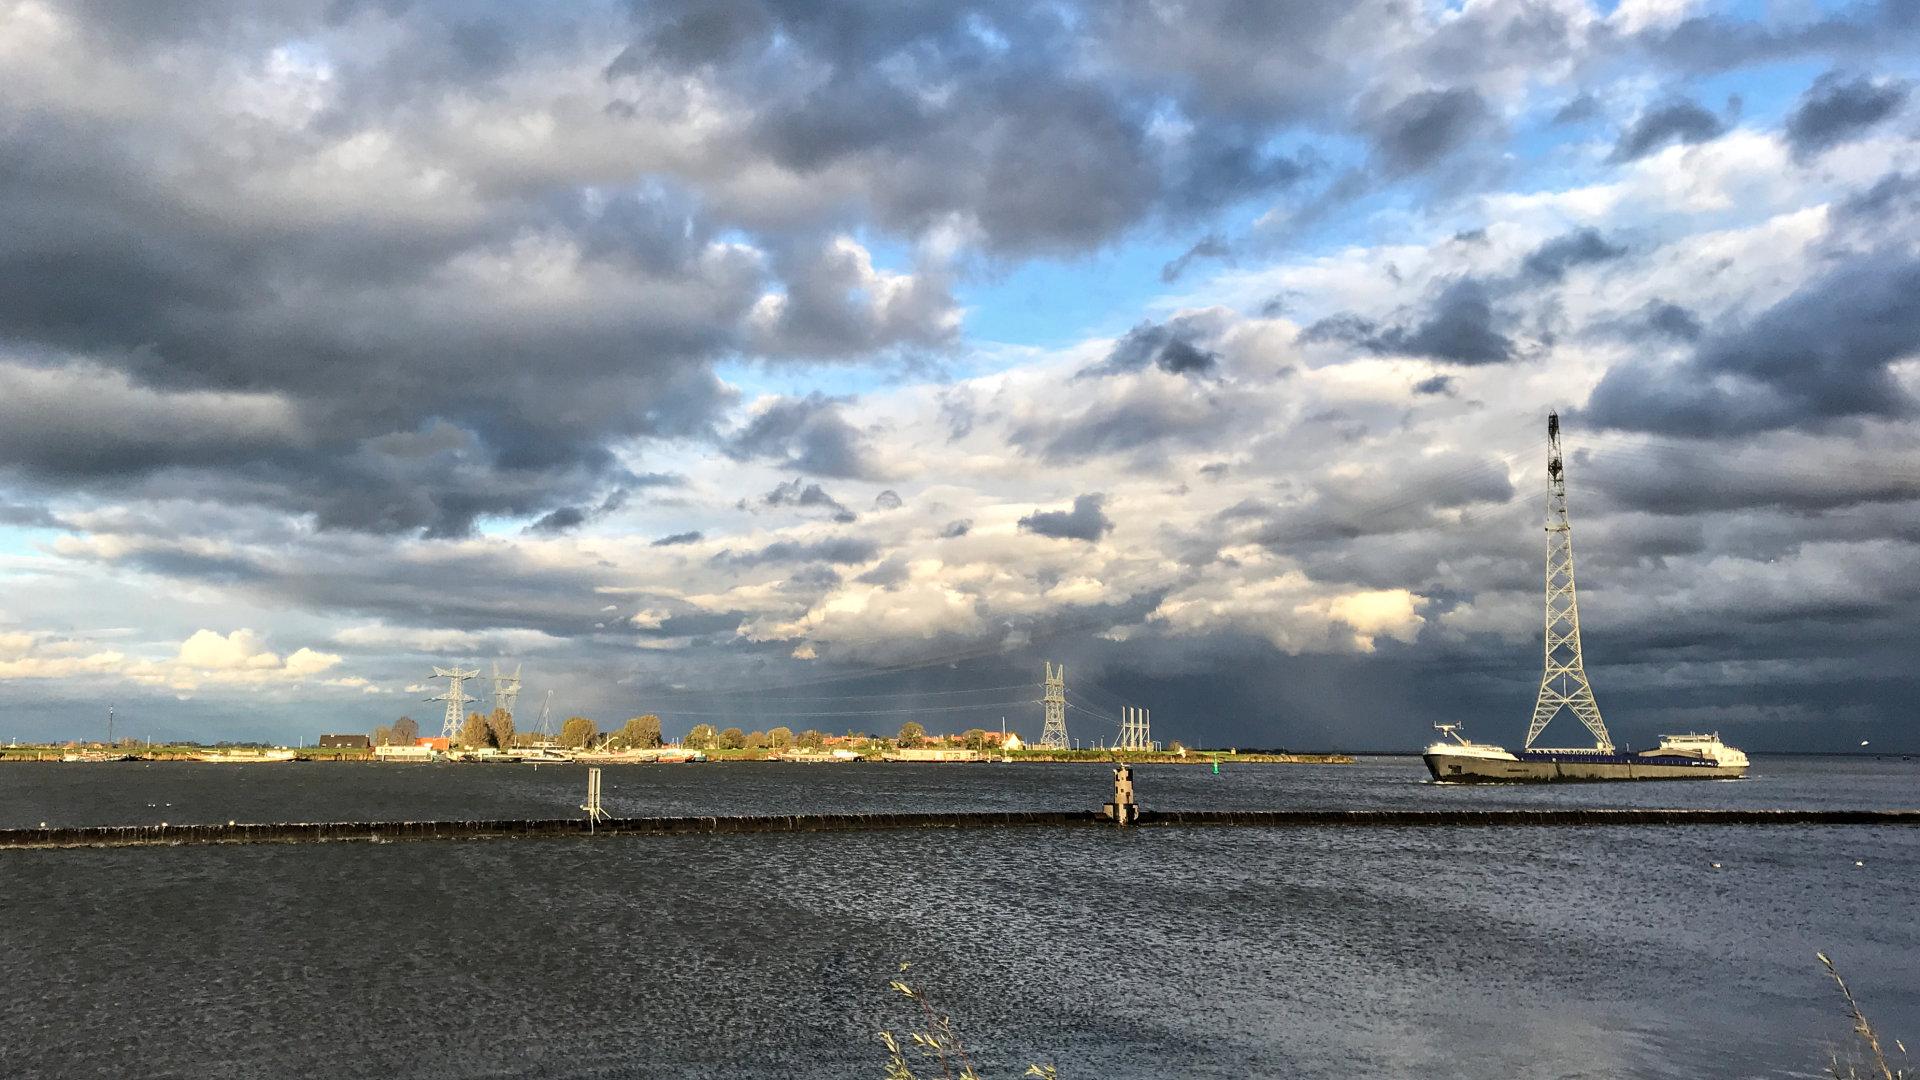 afternoon Durgerdam #durgerdam #photography #skyporn #sky #cloudporn #cloud #rainbow #ijsselmeer